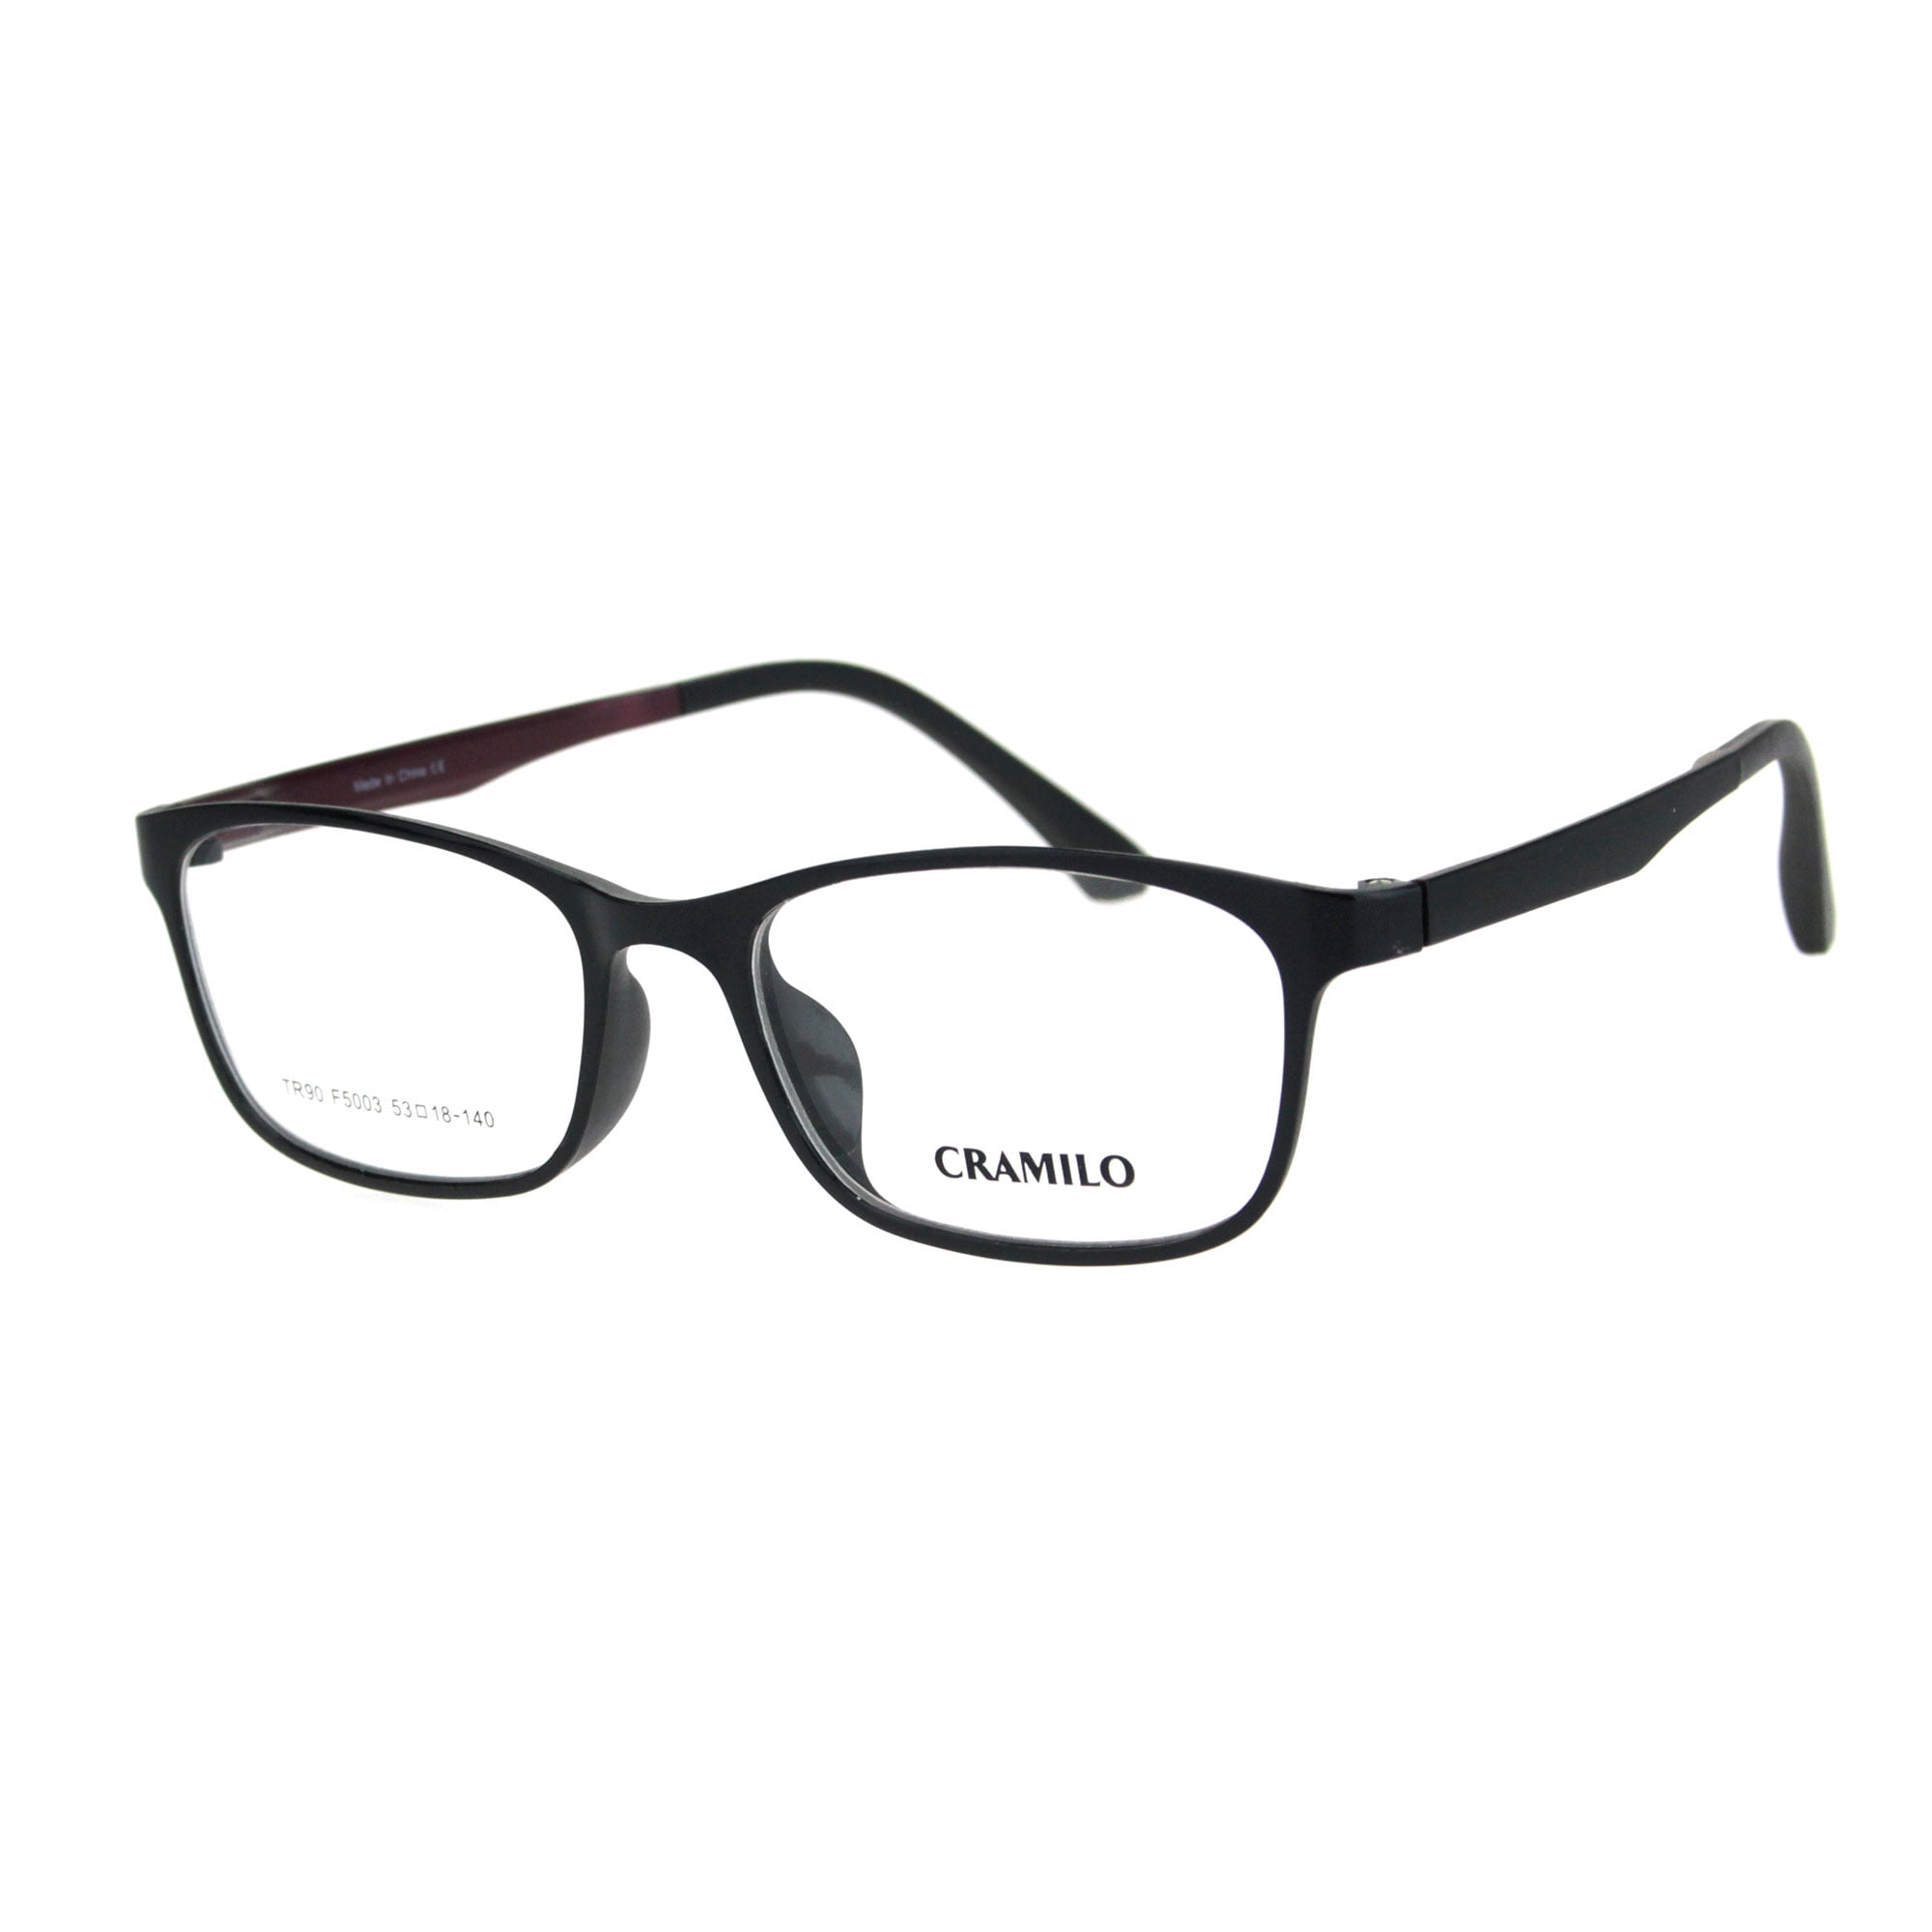 TR90 Mens Eyeglasses Frame Fashion Non Prescription Eyewear Rectangular Lightweight Glasses